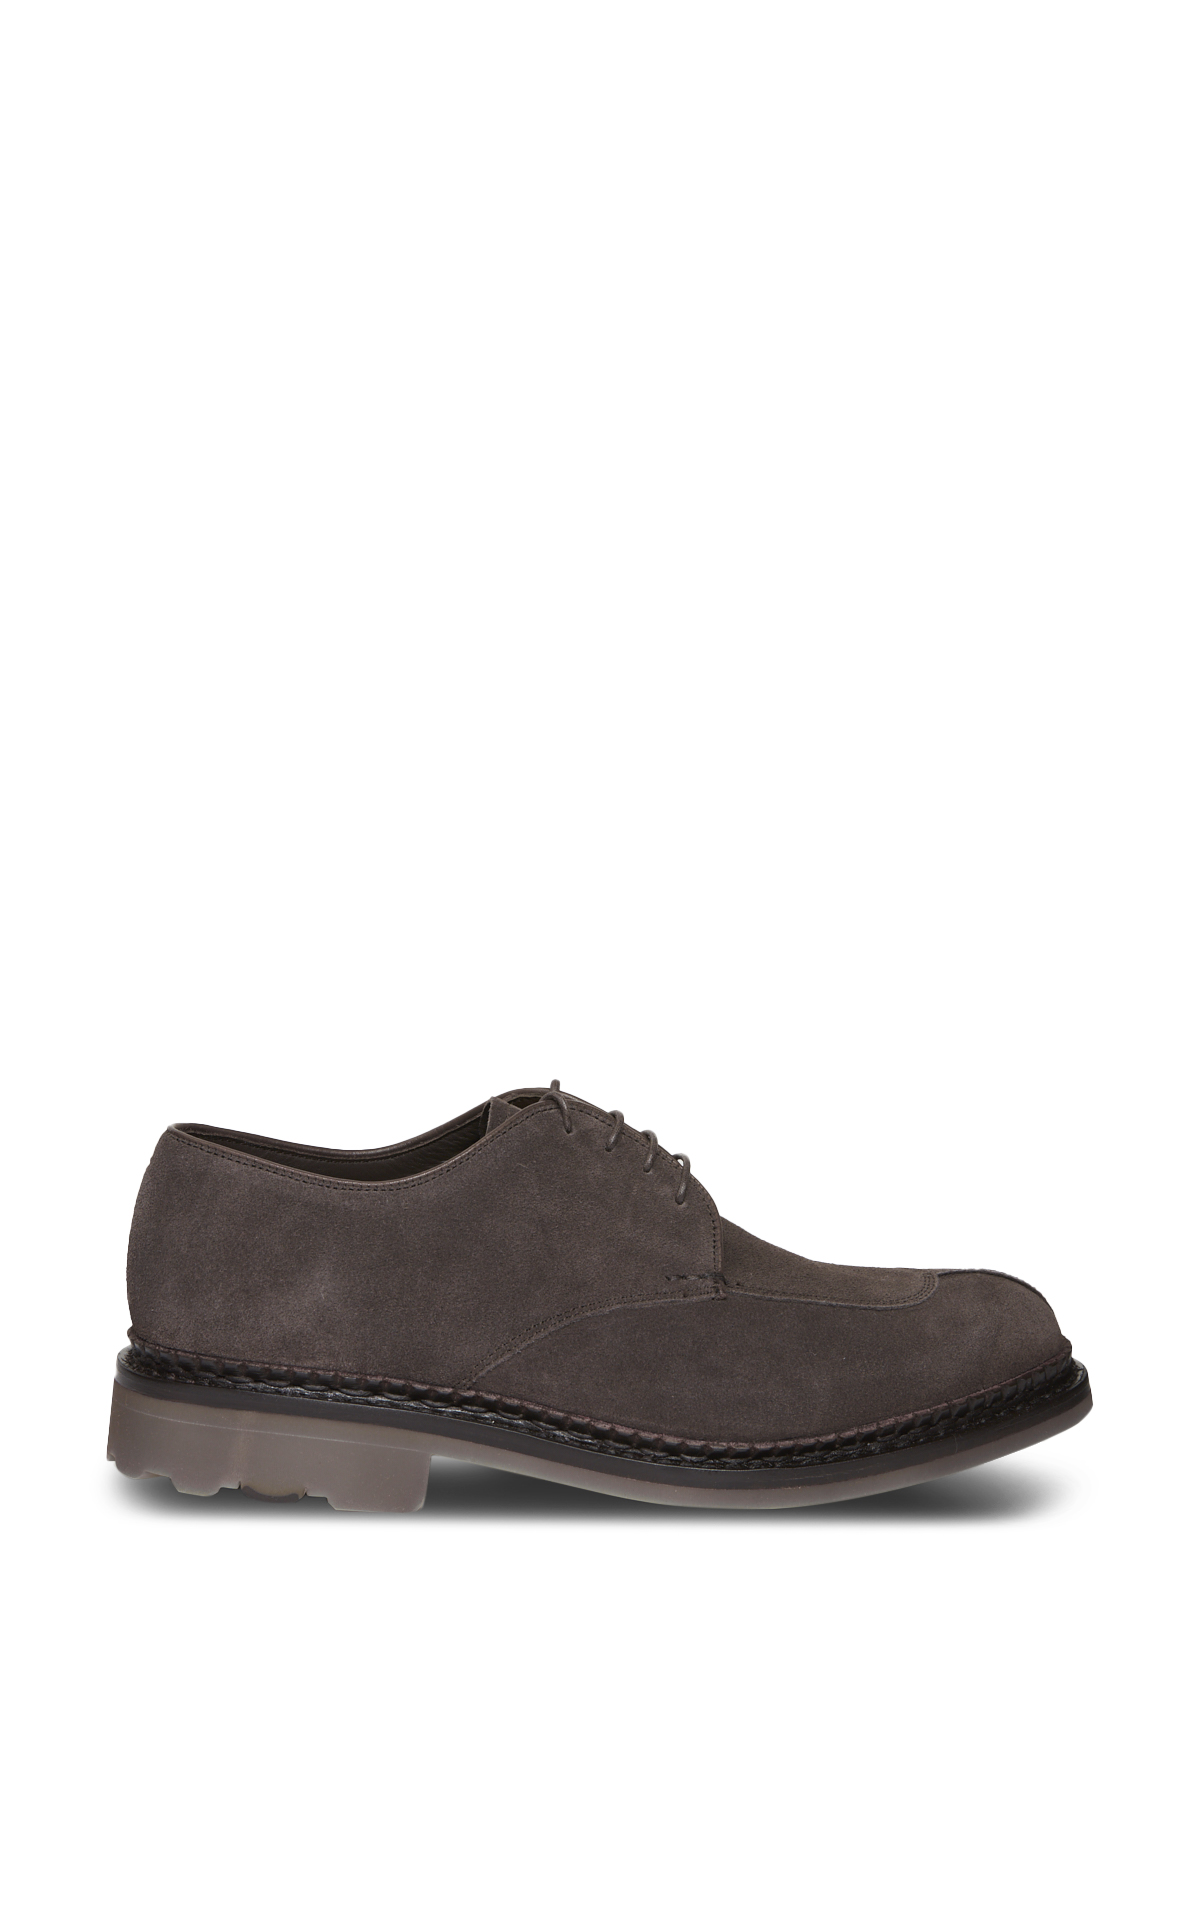 Brown velvet derby shoes*